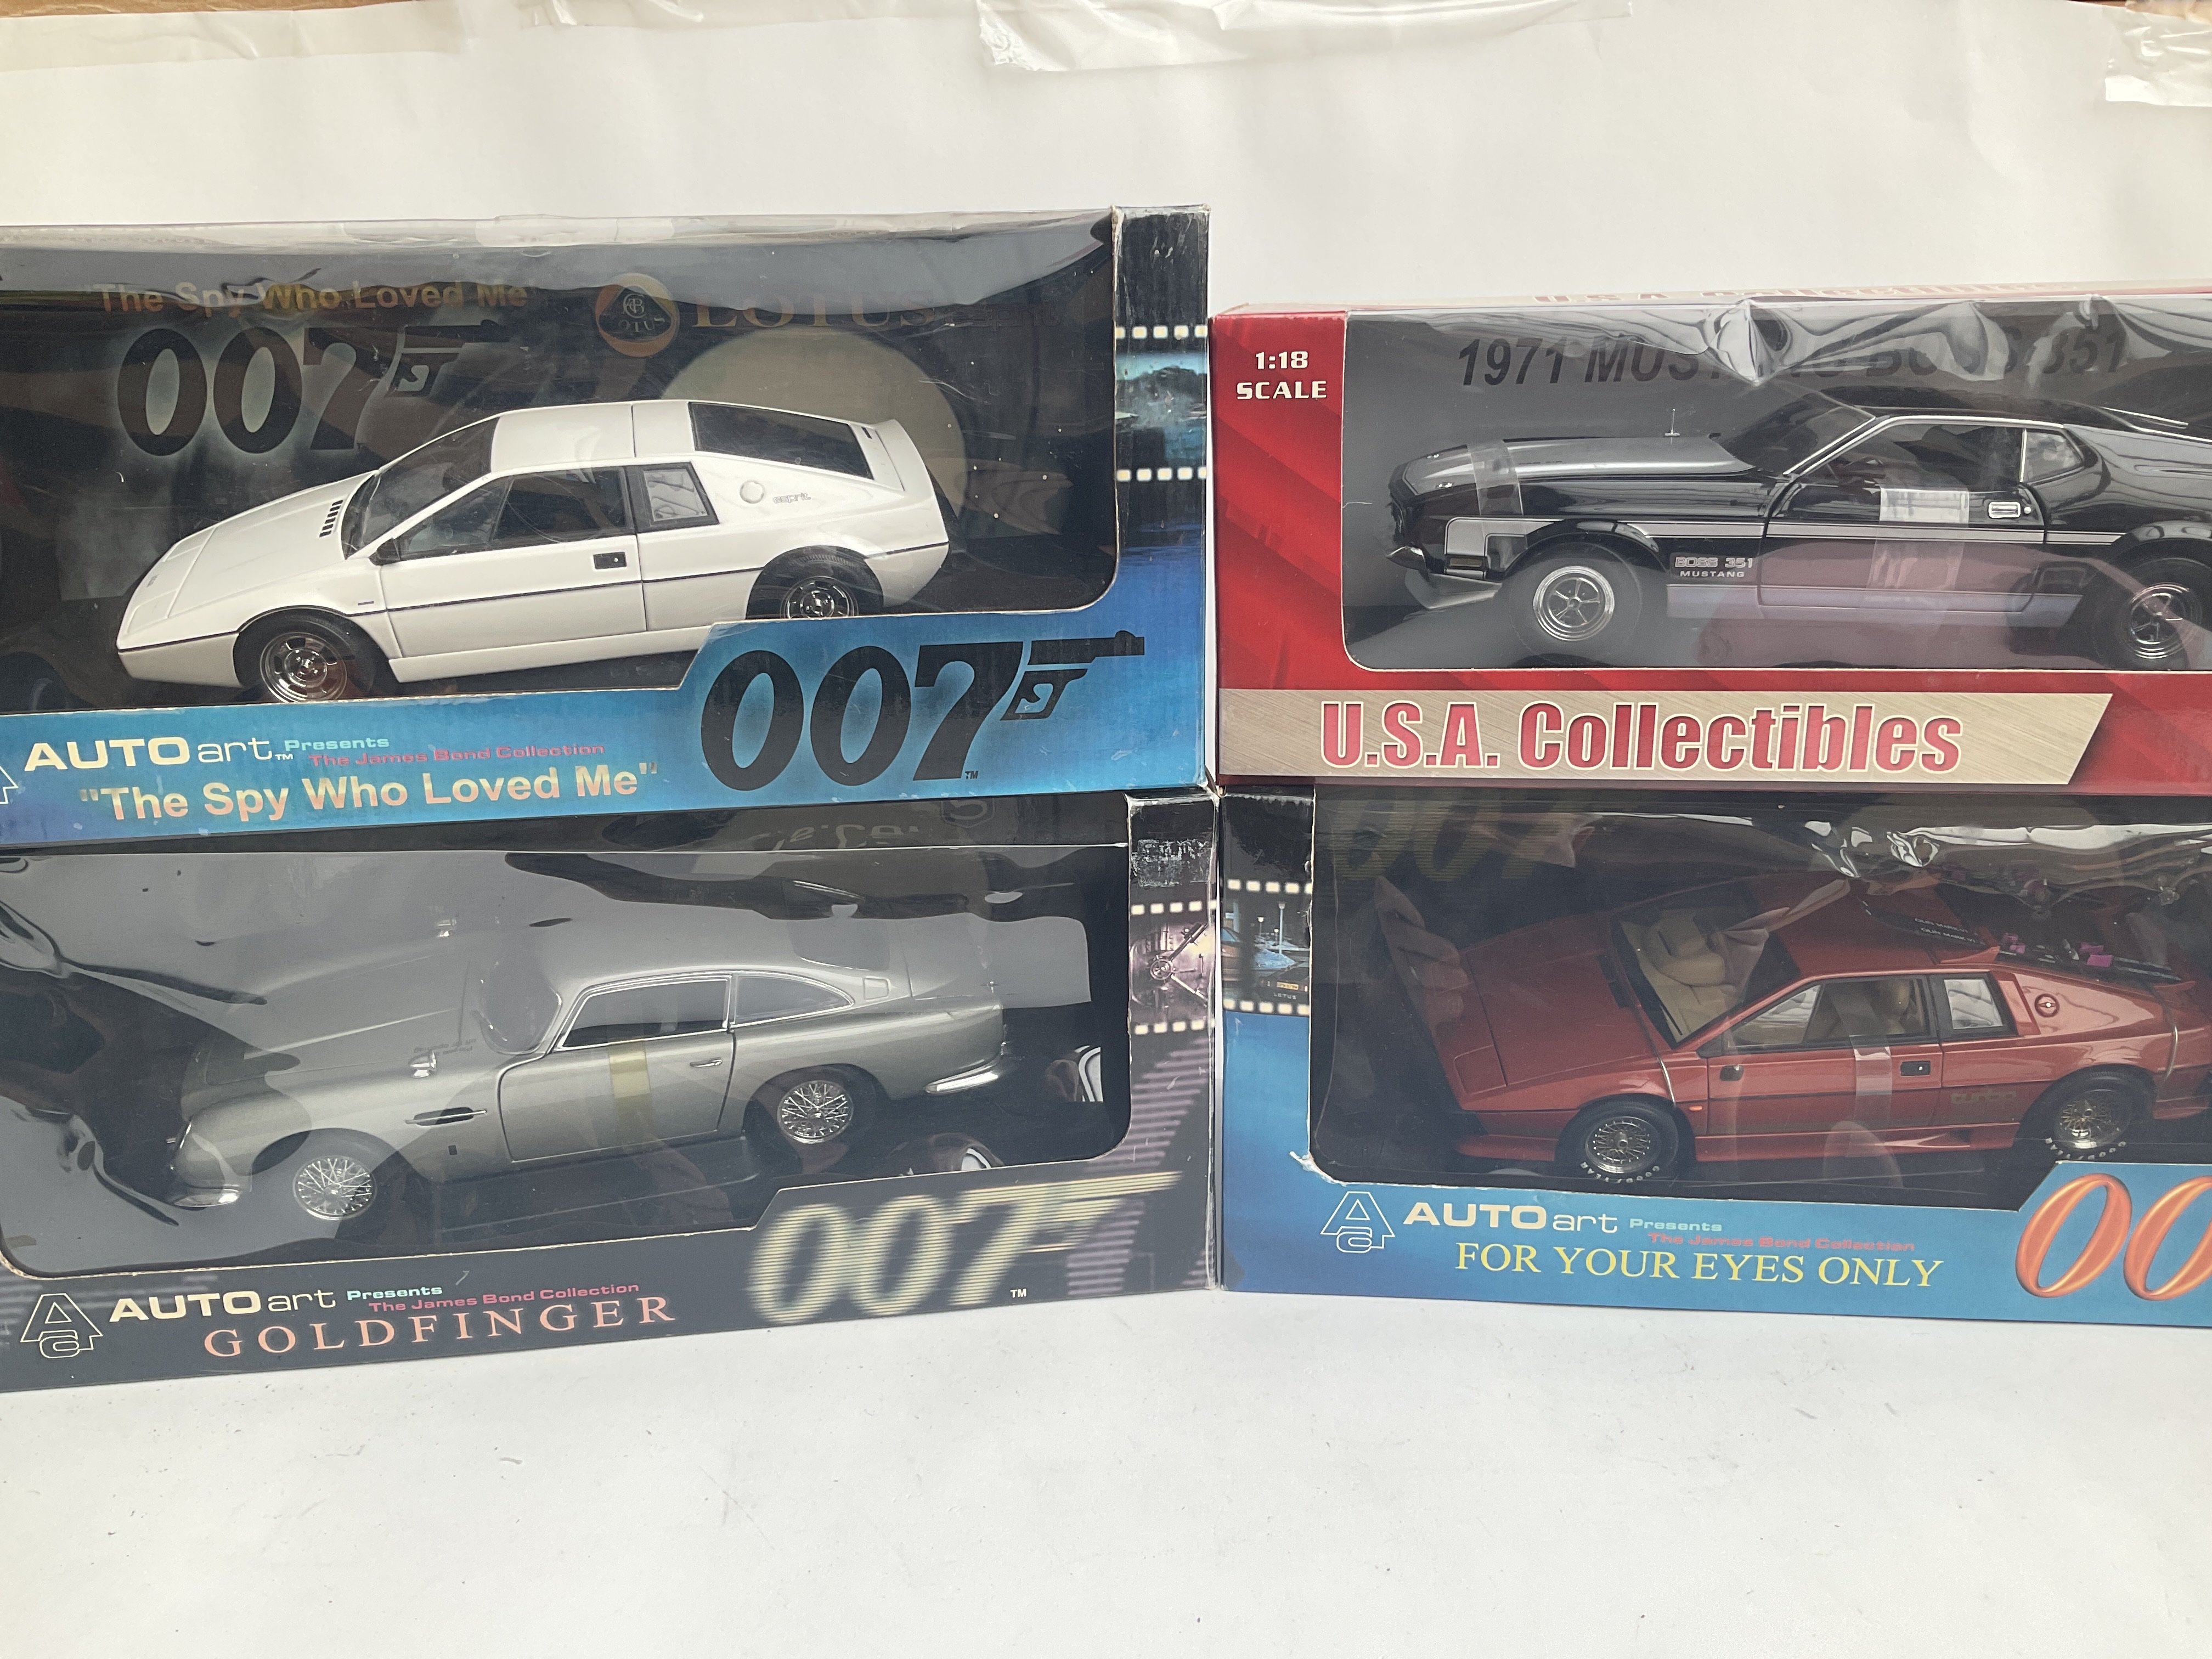 4 X Boxed Cars. 3 James Bond Autoart Cars and a Su